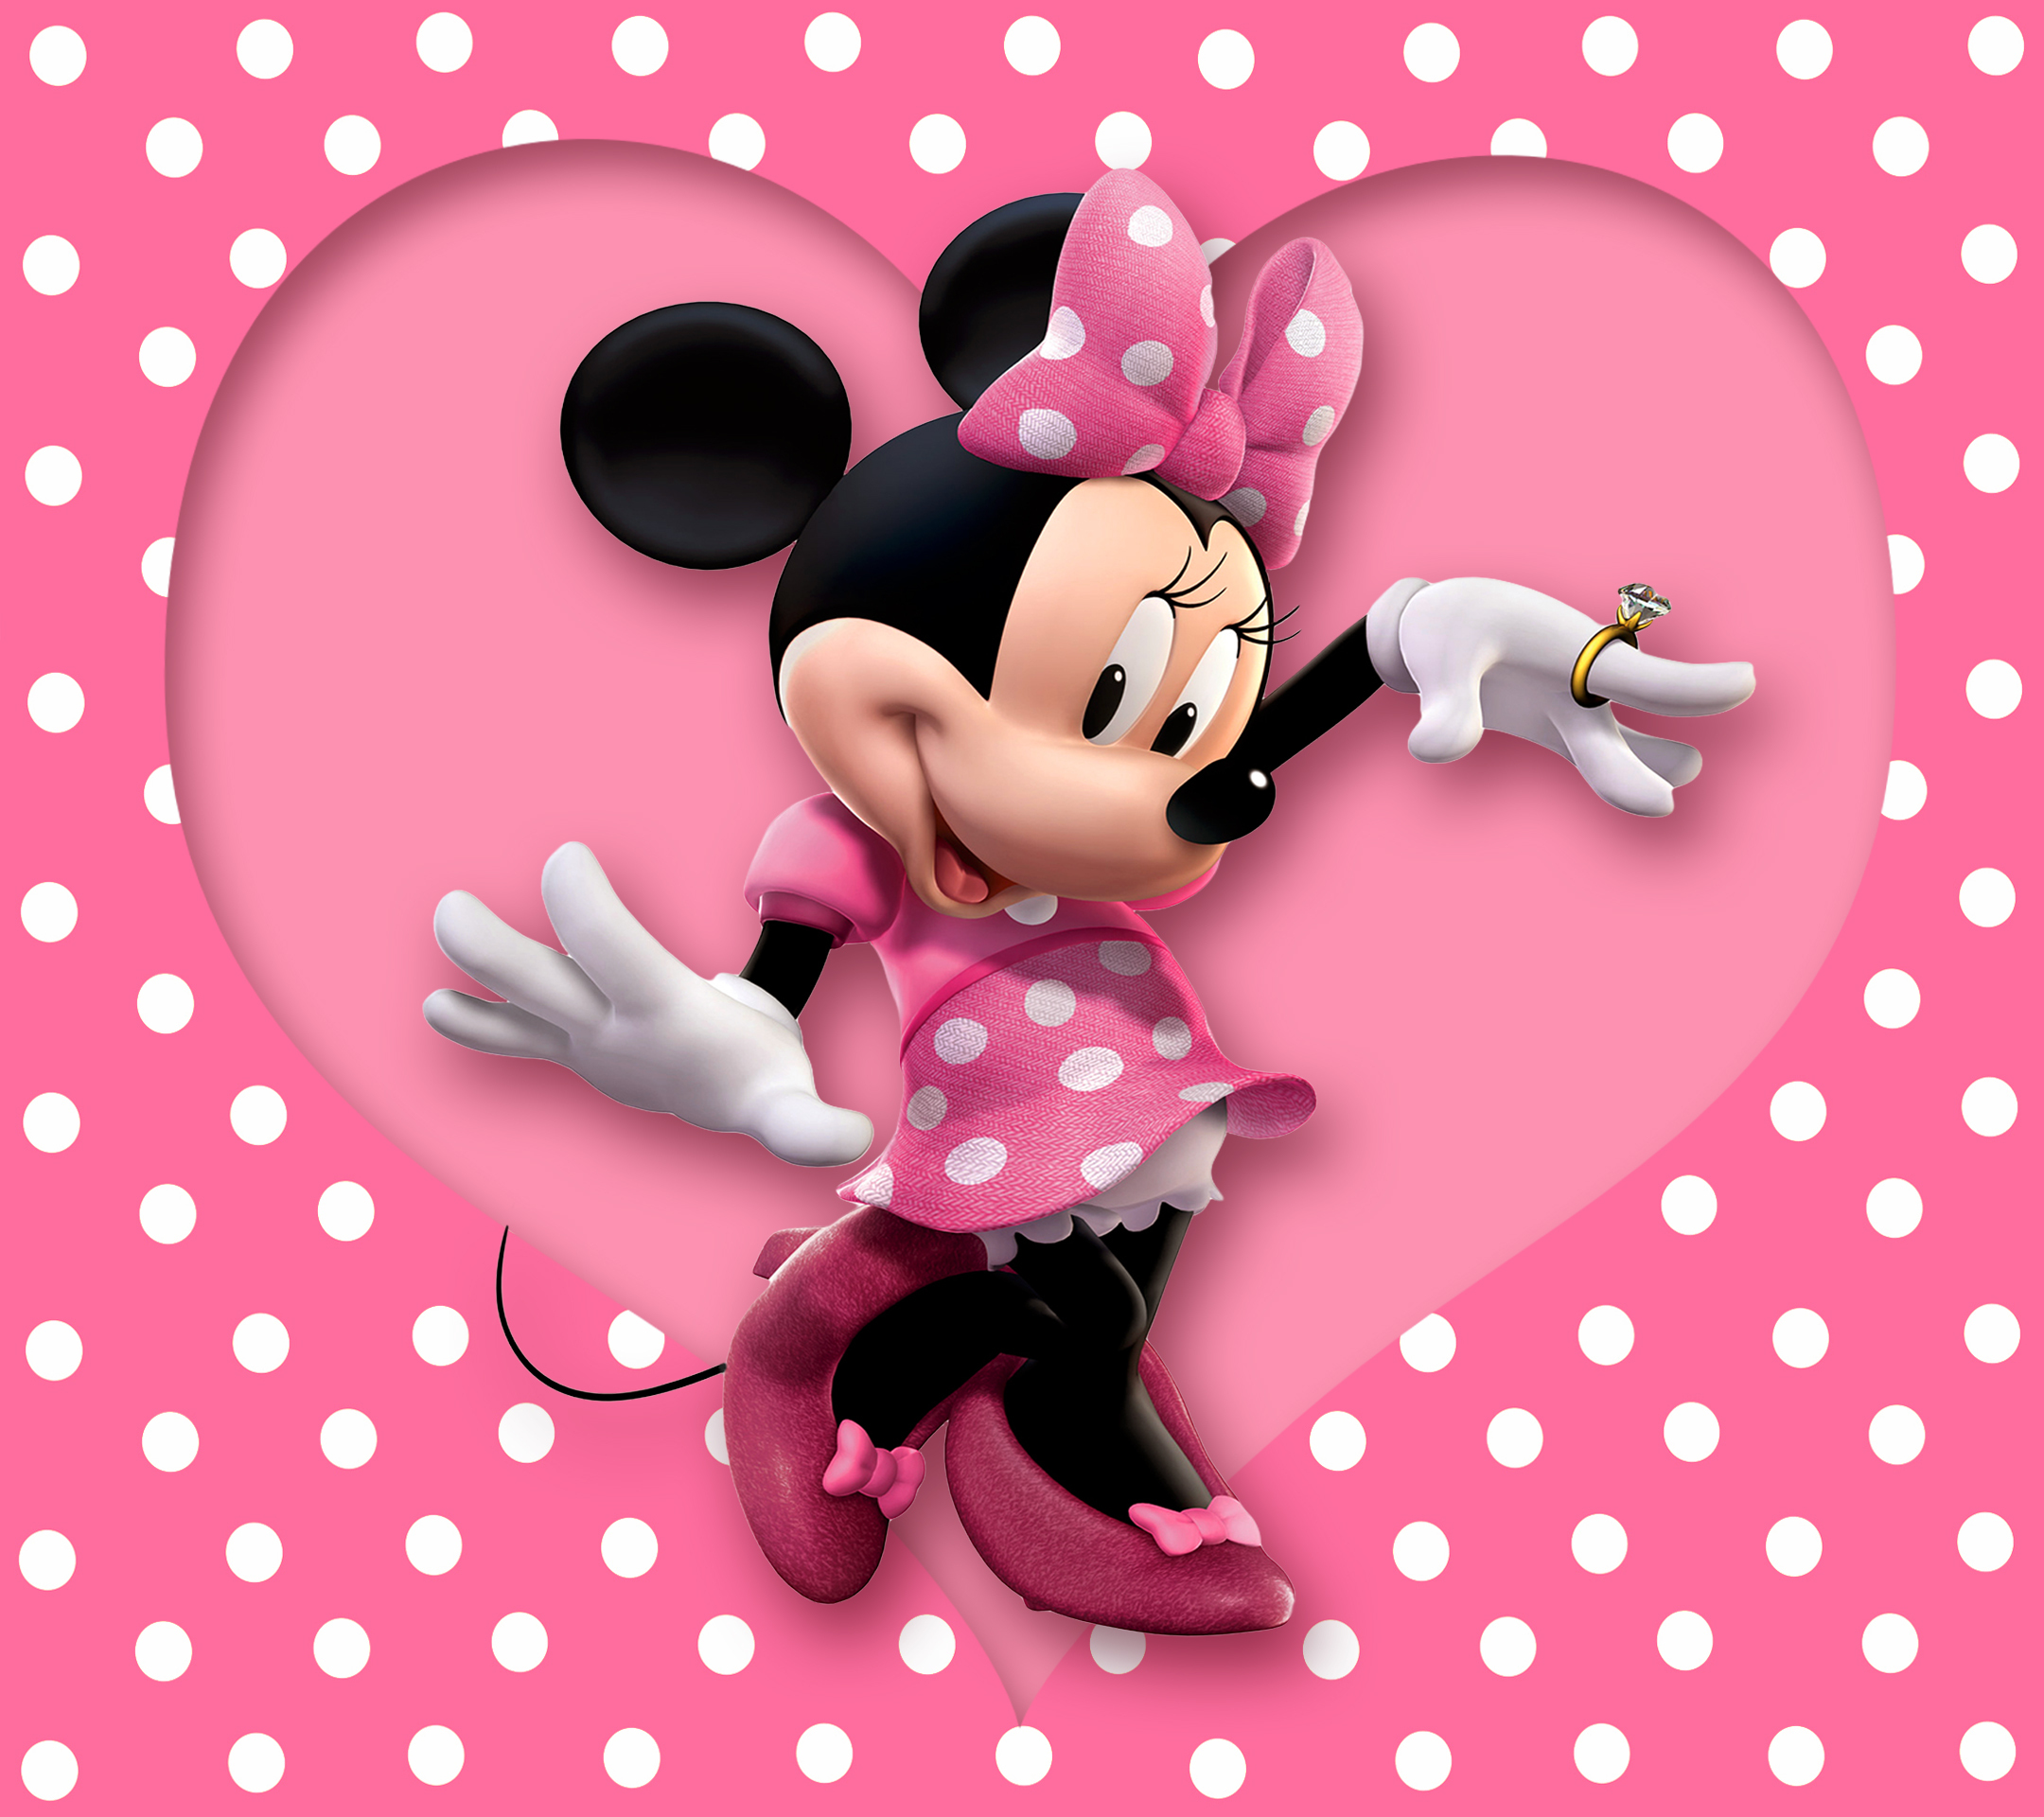 50+] Minnie Mouse Wallpaper for iPad - WallpaperSafari